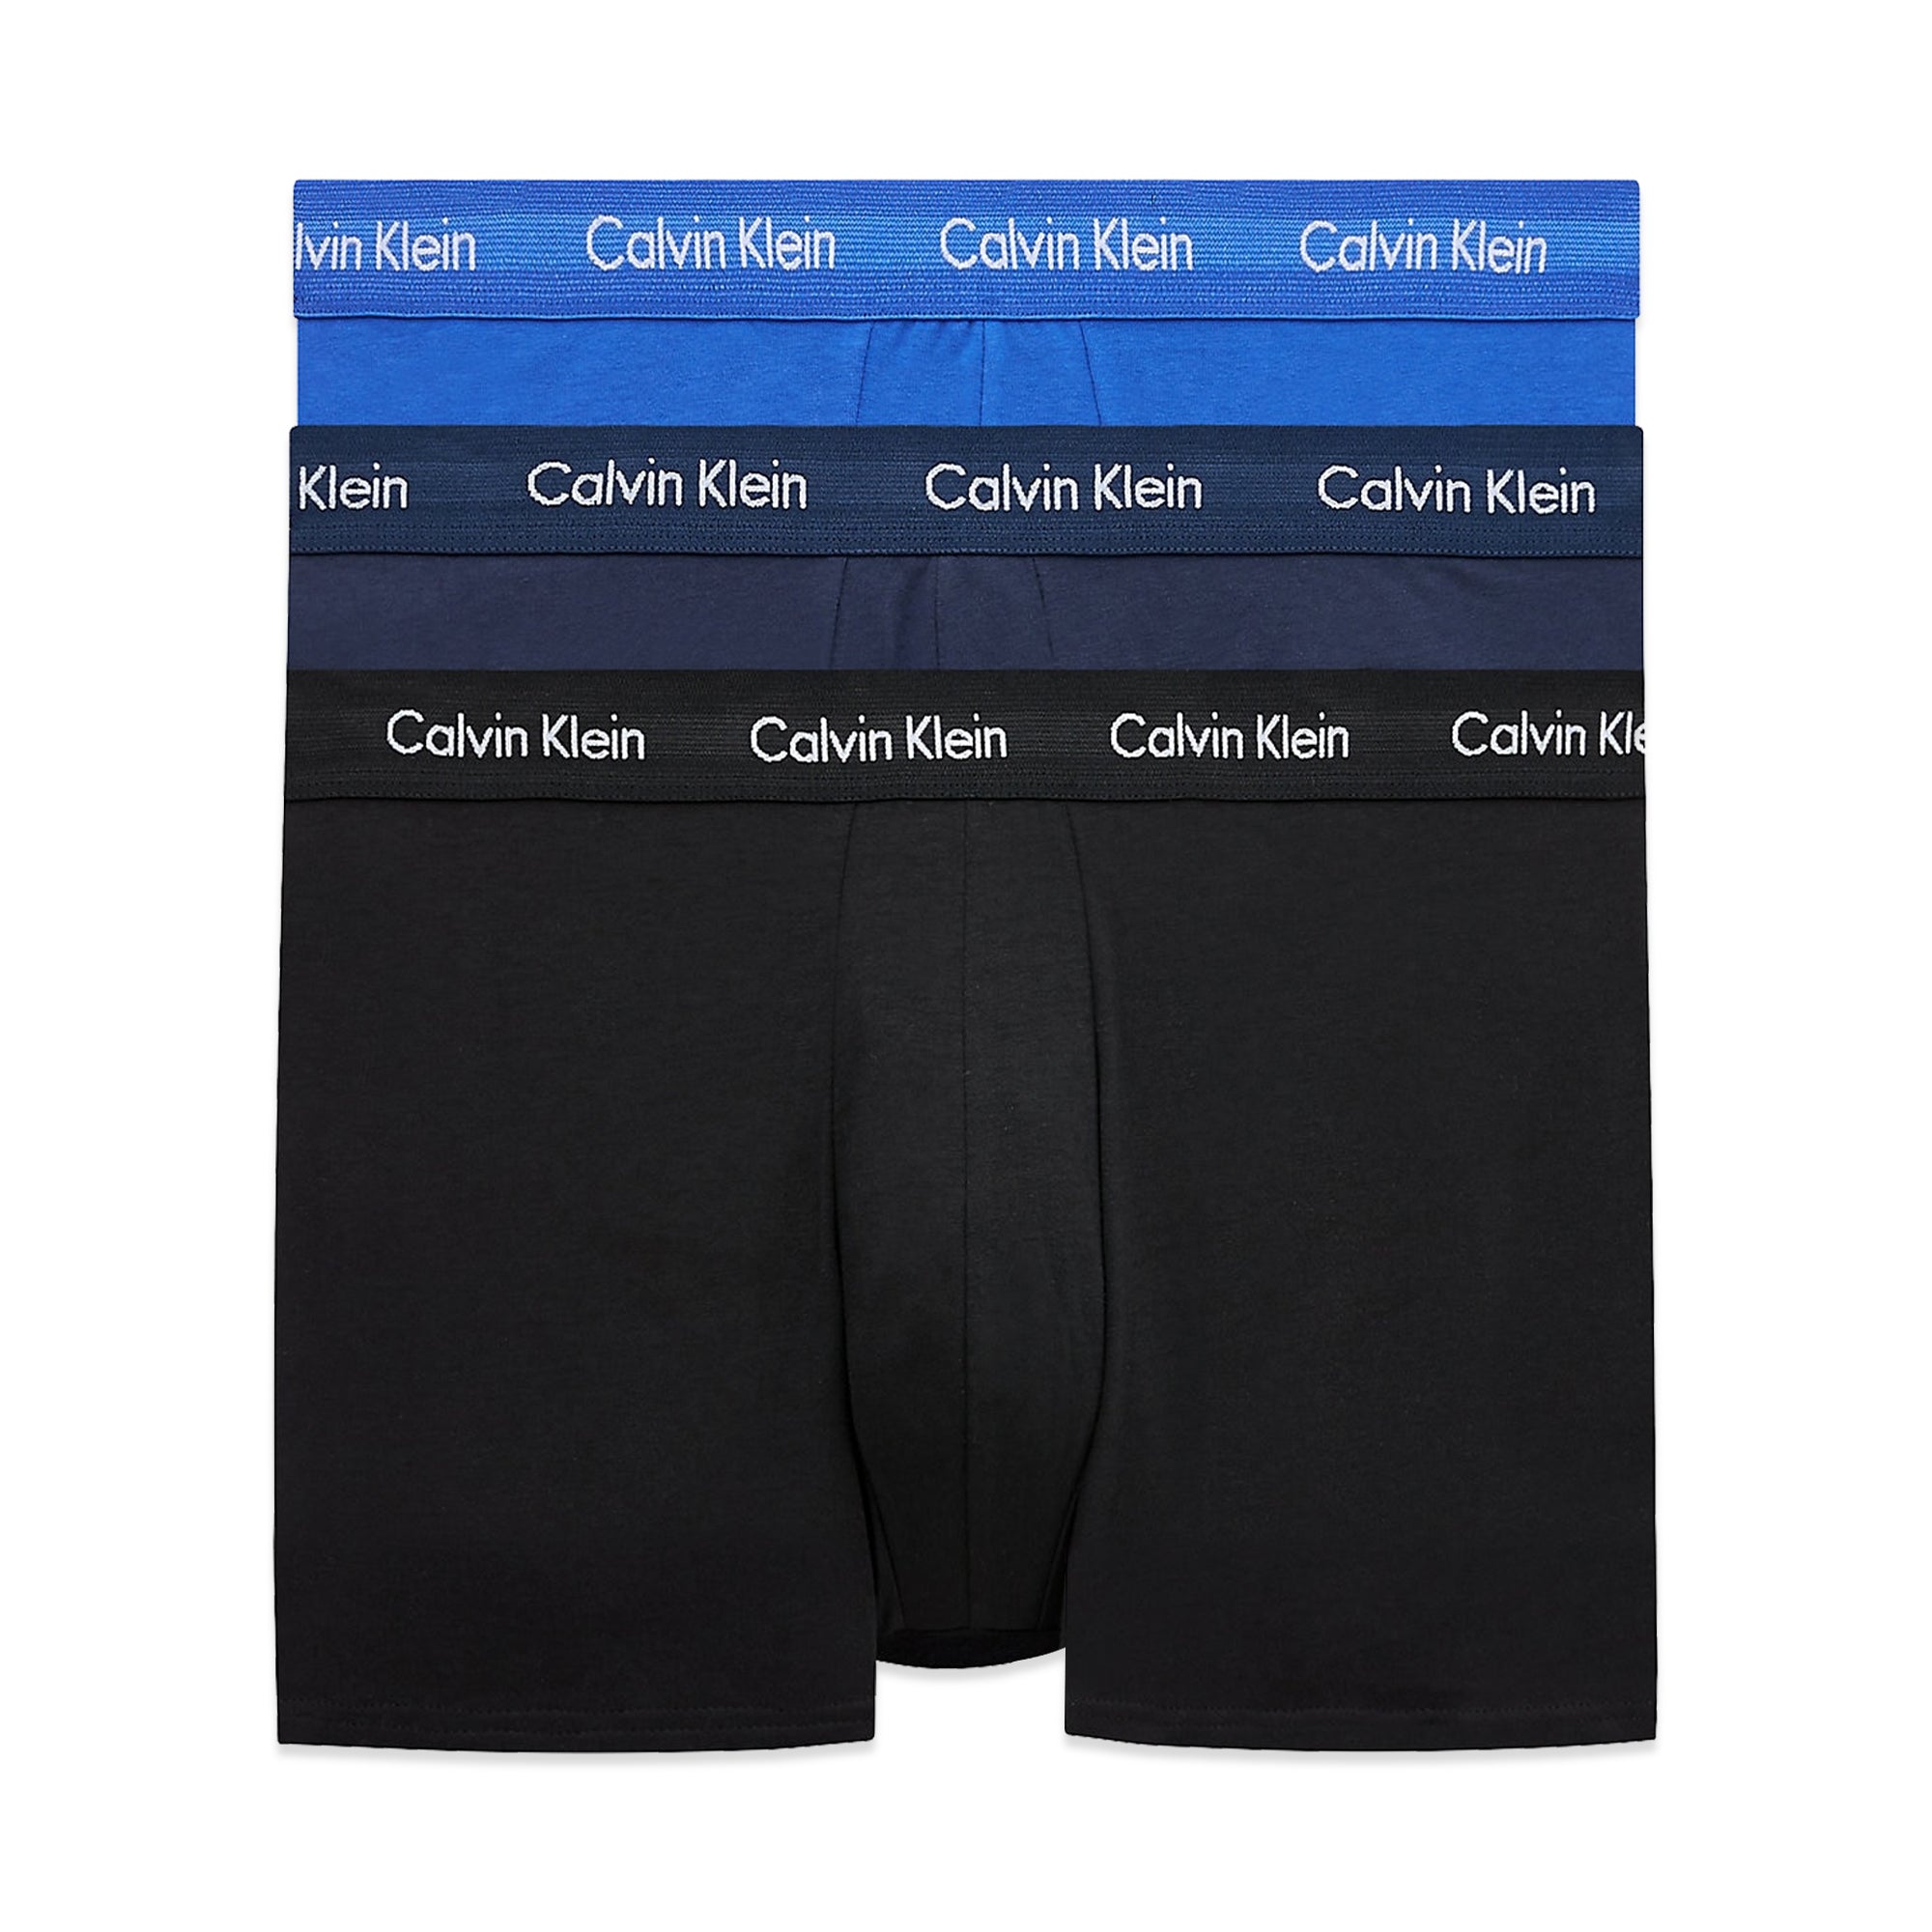 Calvin Klein Low Rise Cotton Stretch Trunks - Black/Blue/Blue